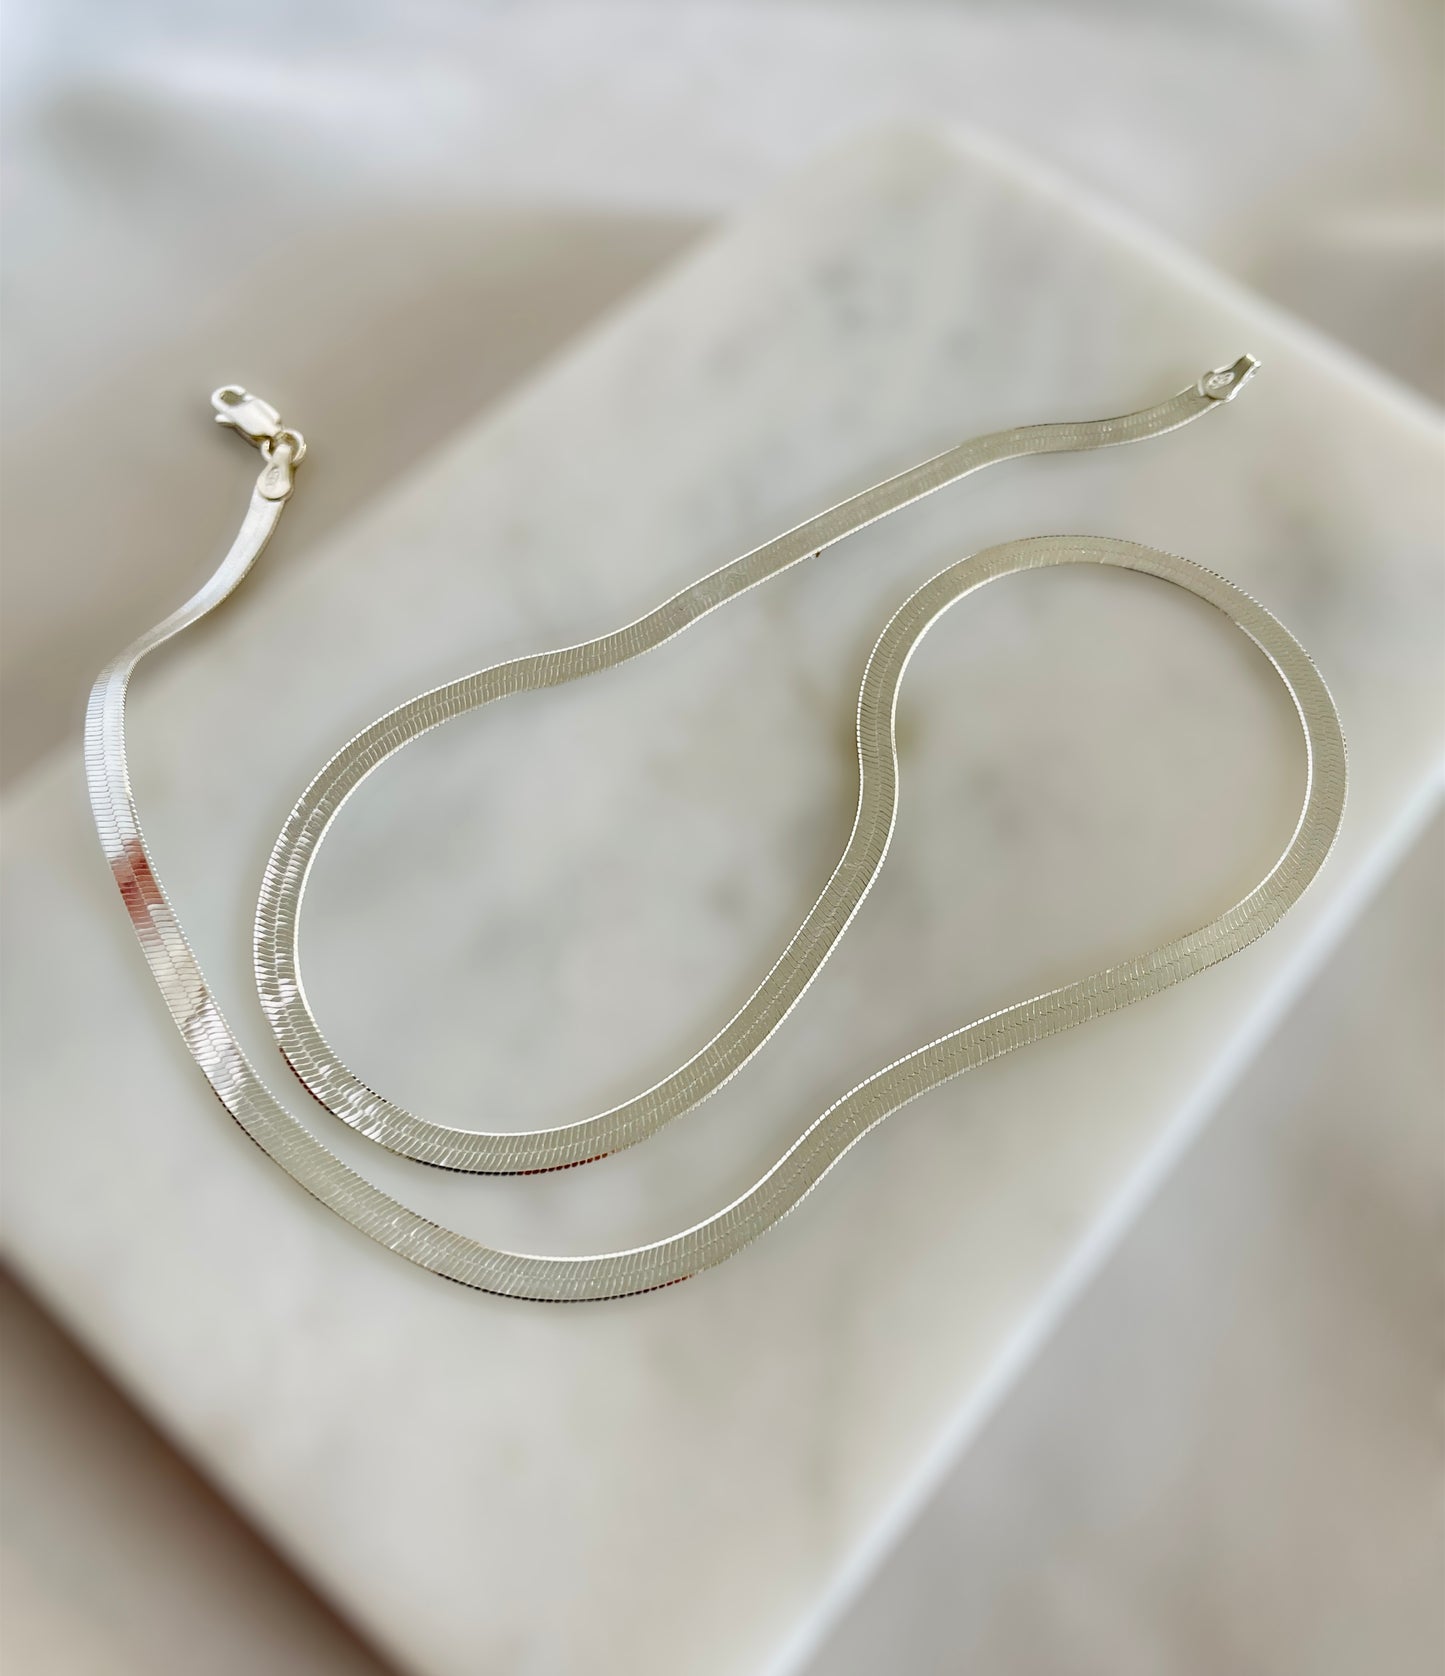 Italian 925 Sterling Silver Herringbone Chain Necklace 3.3mm